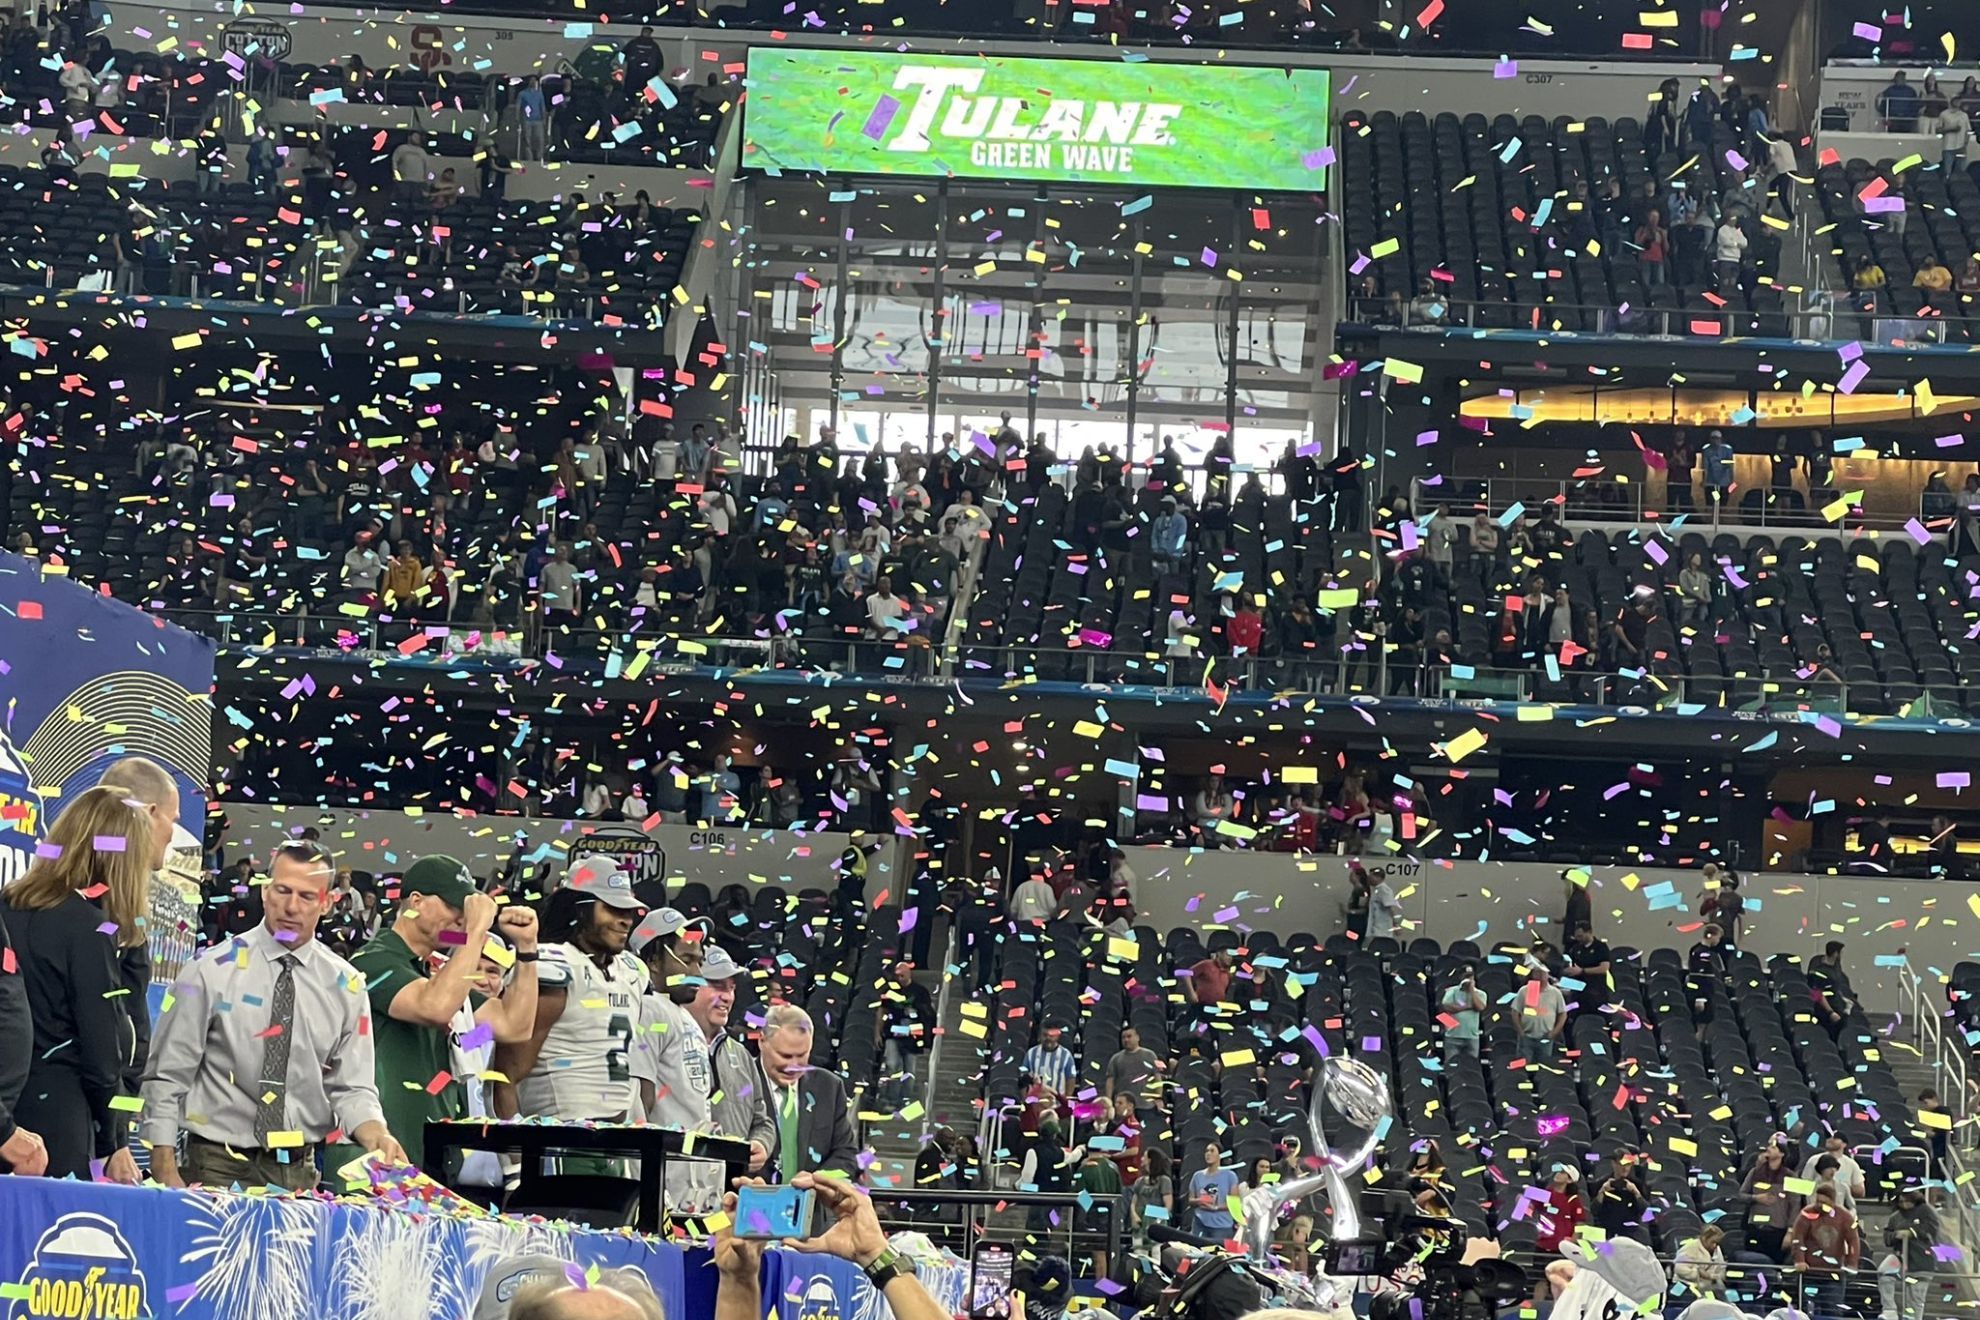 Tulane celebrates Cotton Bowl victory at AT&T Stadium in Dallas.